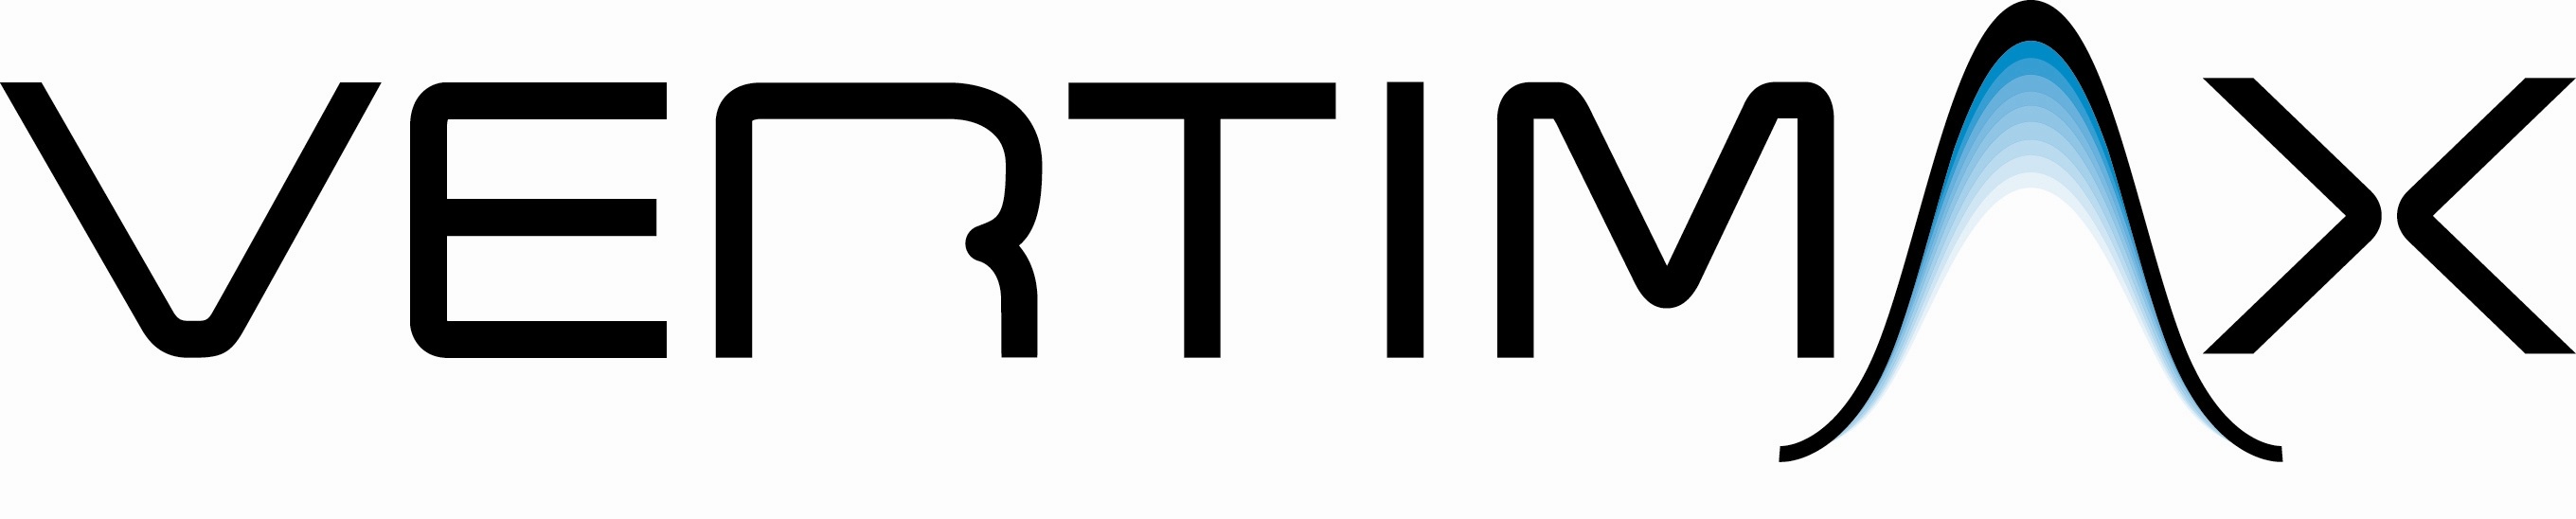 vertimax logo.jpg